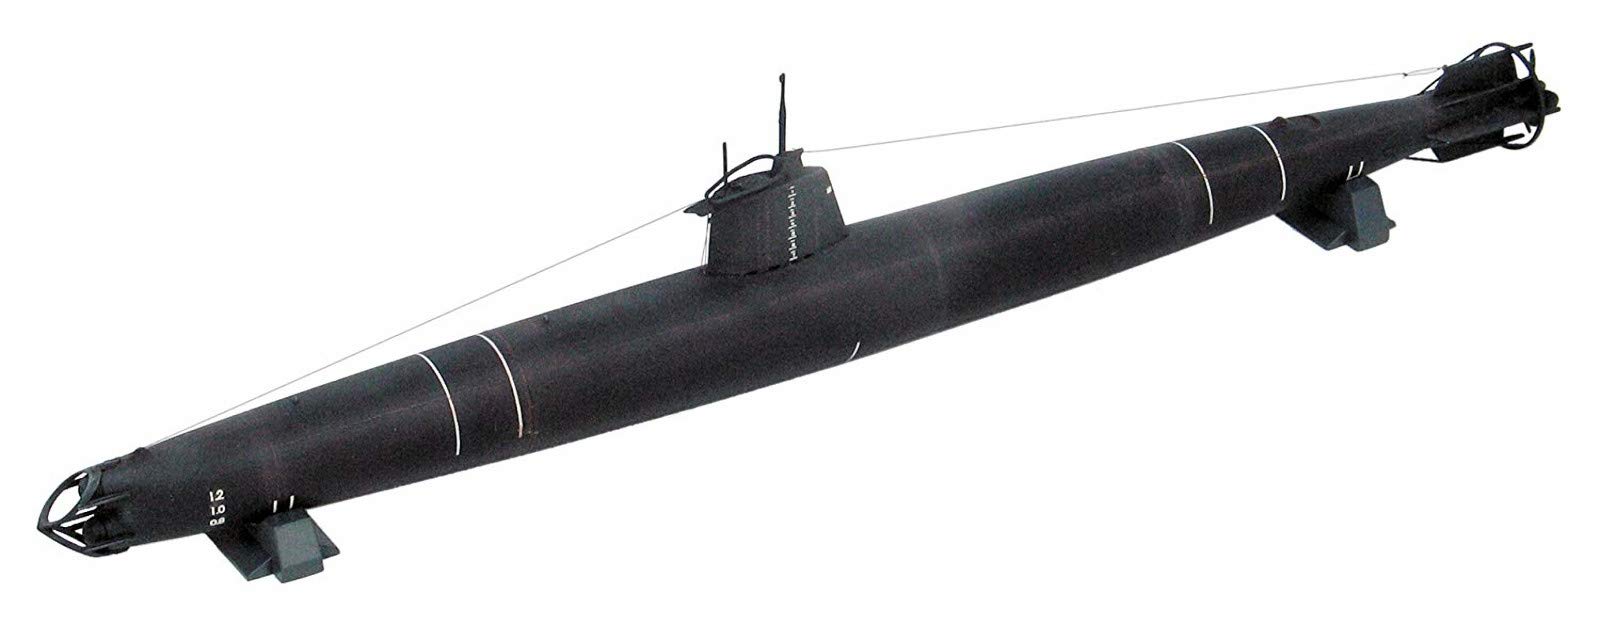 FINE MOLDS 1/72 Ijn Ko-Hyoteki Class Midget Submarine Pearl Harbor Plastic Model